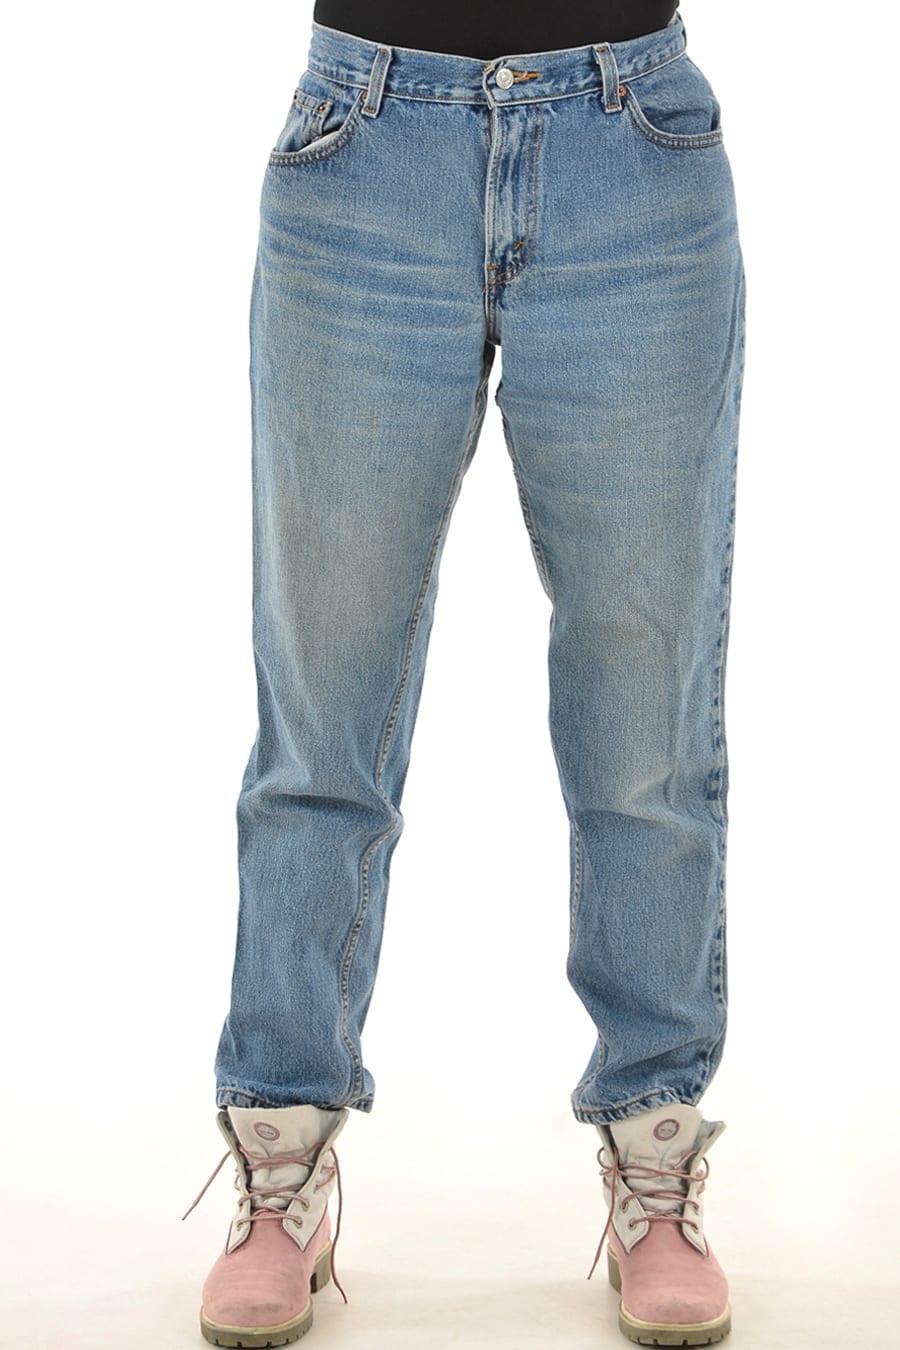 Vintage Levi's 550 Relaxed Fit Jeans | Size 30/30 - Brick Vintage